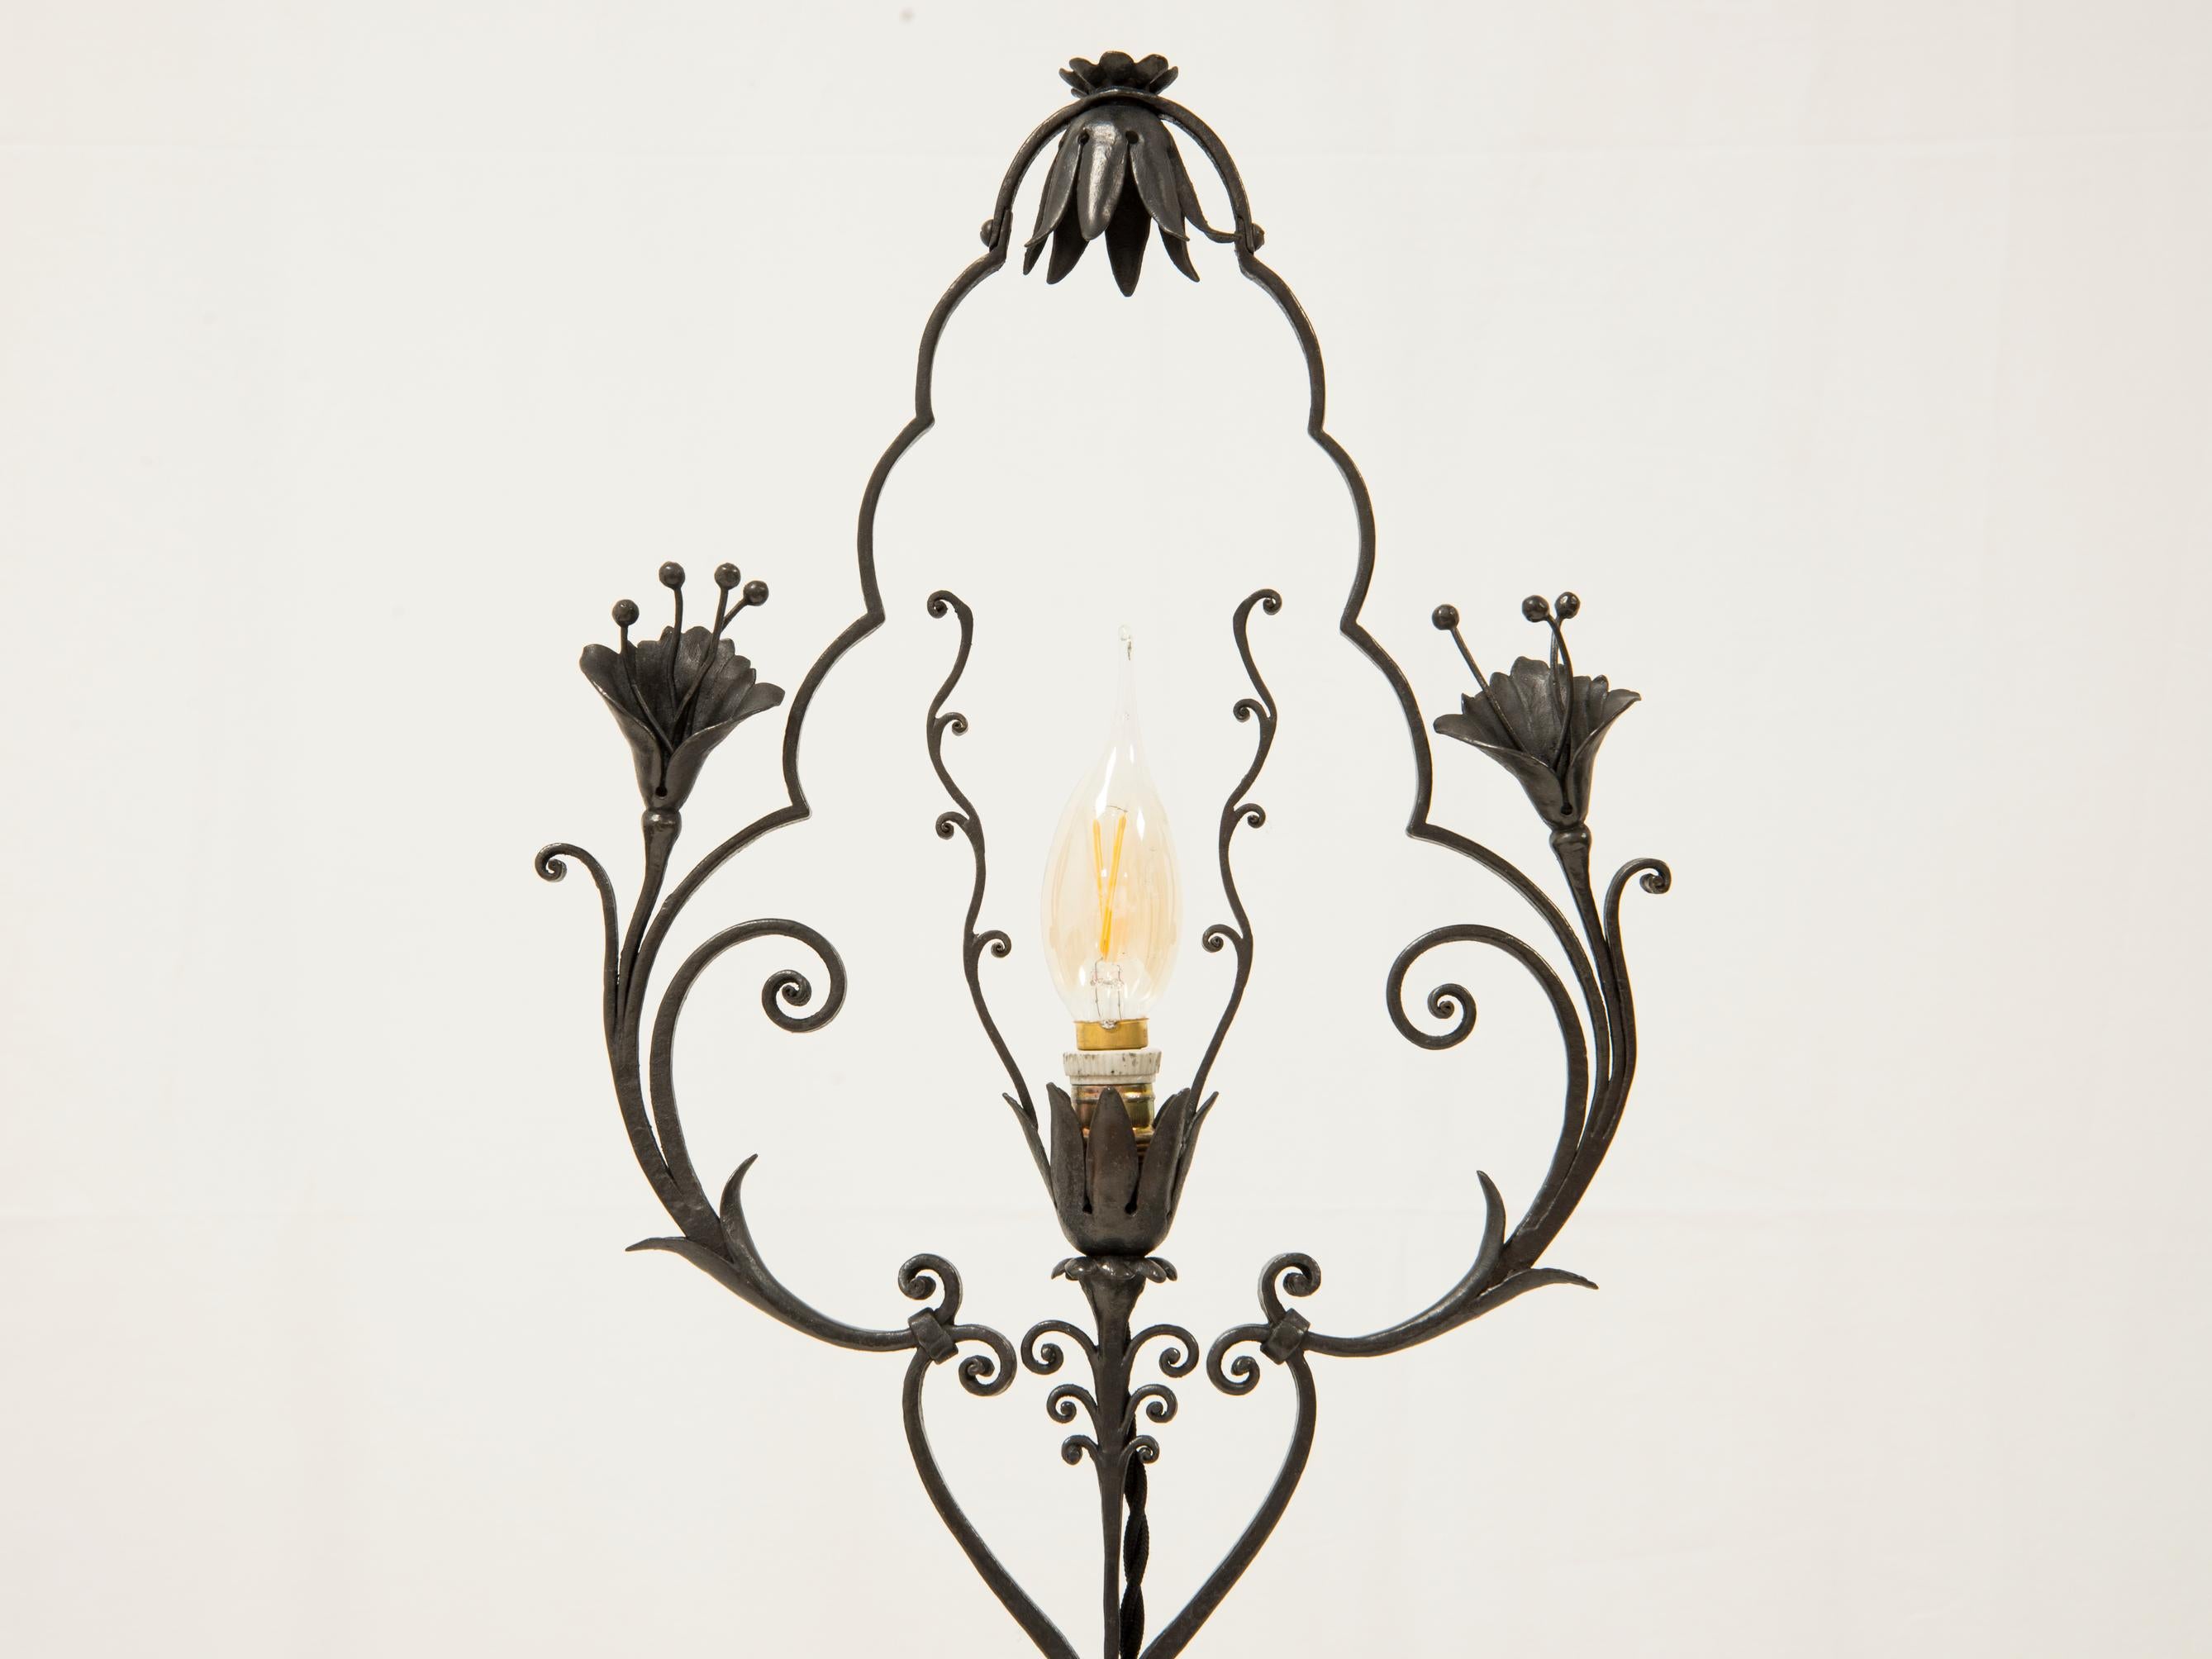 Carlo Rizzarda
Table lamp
Wrought iron
Italy, circa 1920. 
Work form the Liberty period.
 